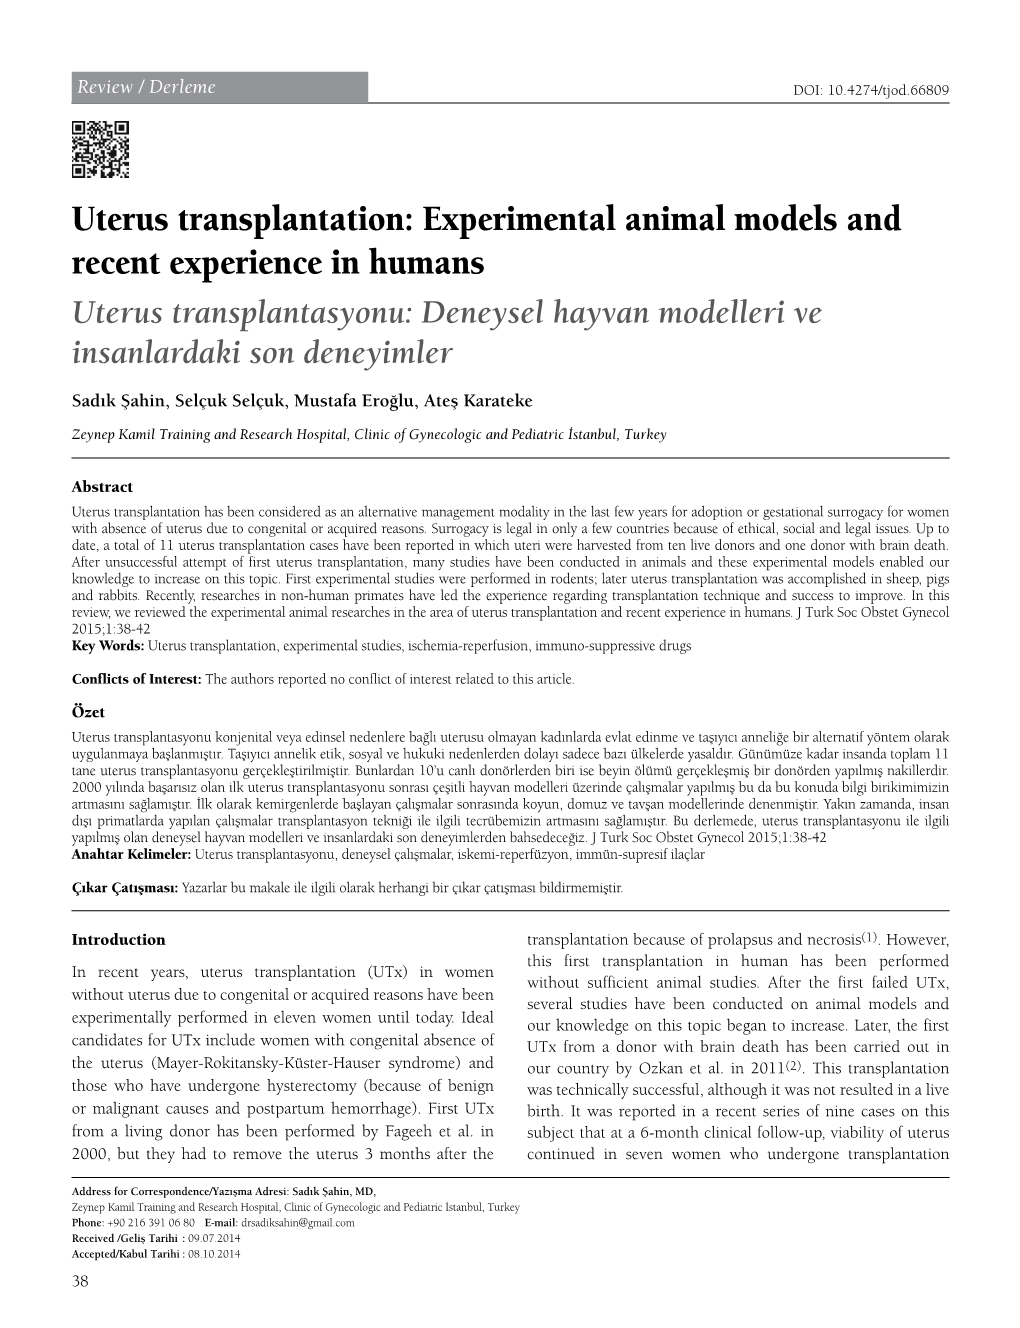 Uterus Transplantation: Experimental Animal Models and Recent Experience in Humans Uterus Transplantasyonu: Deneysel Hayvan Modelleri Ve Insanlardaki Son Deneyimler